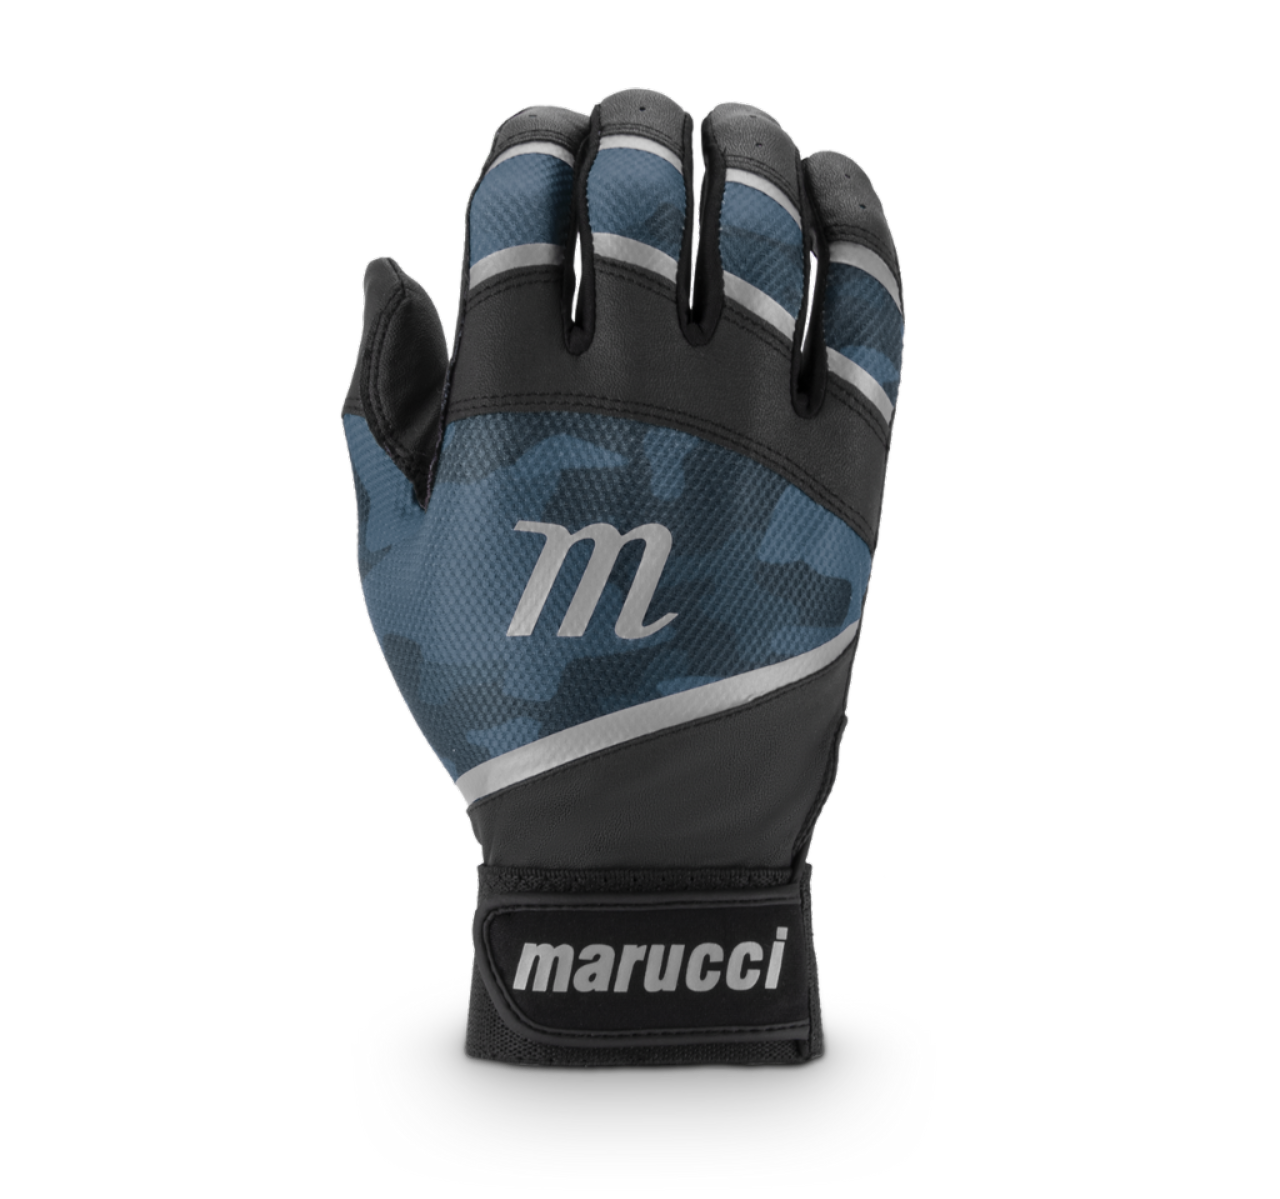 Marucci Foxtrot tee ball batting gloves